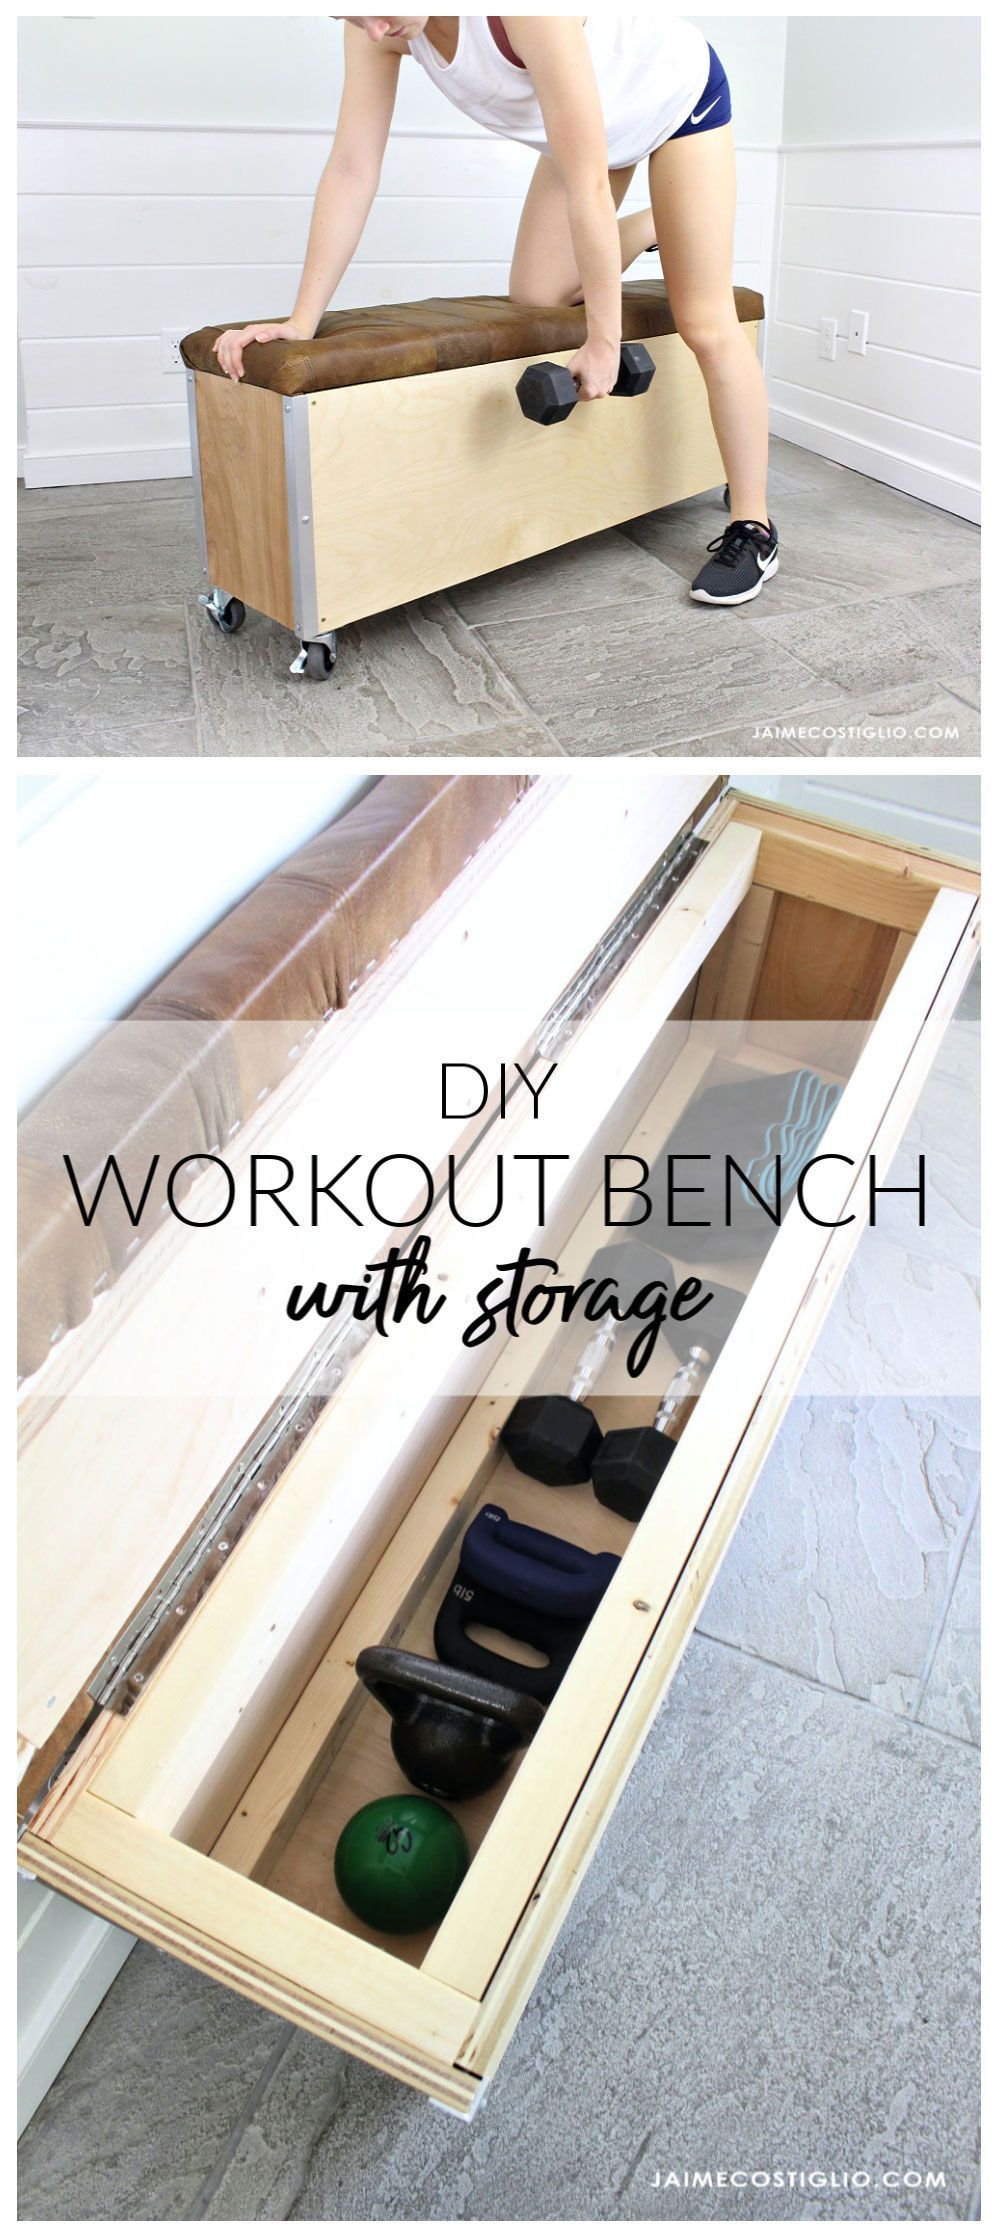 DIY Workout Bench with Storage - Jaime Costiglio - DIY Workout Bench with Storage - Jaime Costiglio -   17 diy Projects tutorials ideas